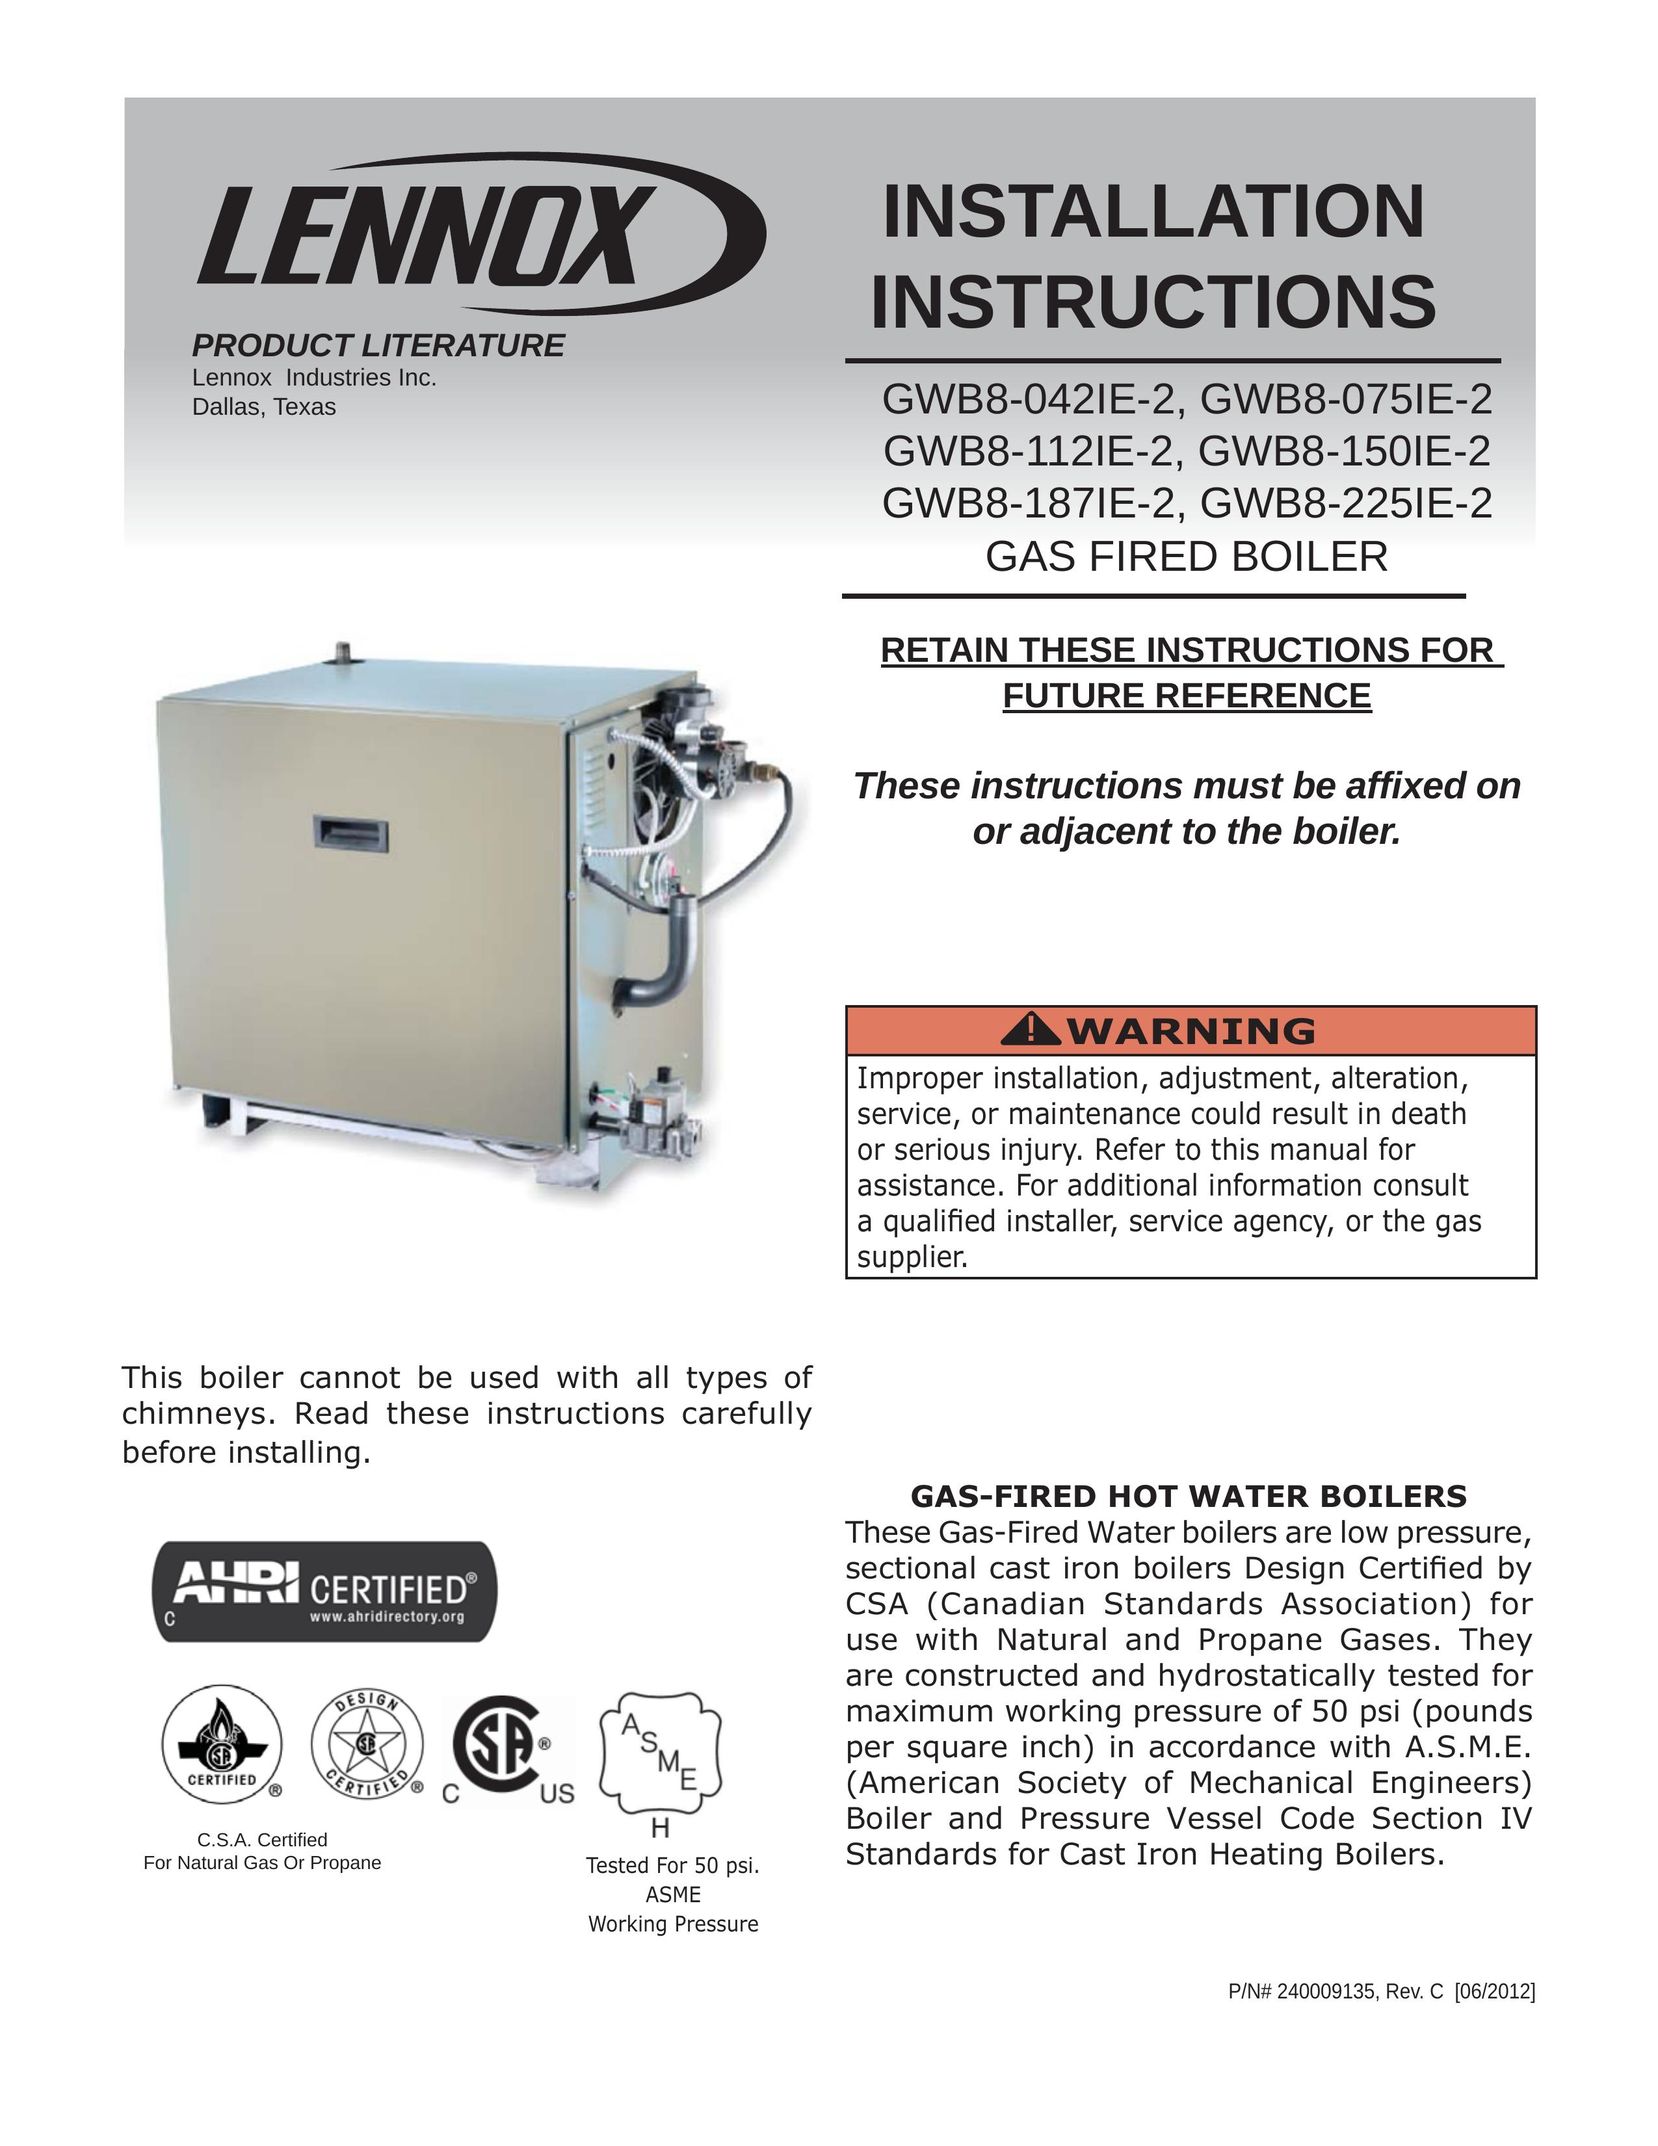 Lennox International Inc. GWB8-075IE-2 Oven User Manual